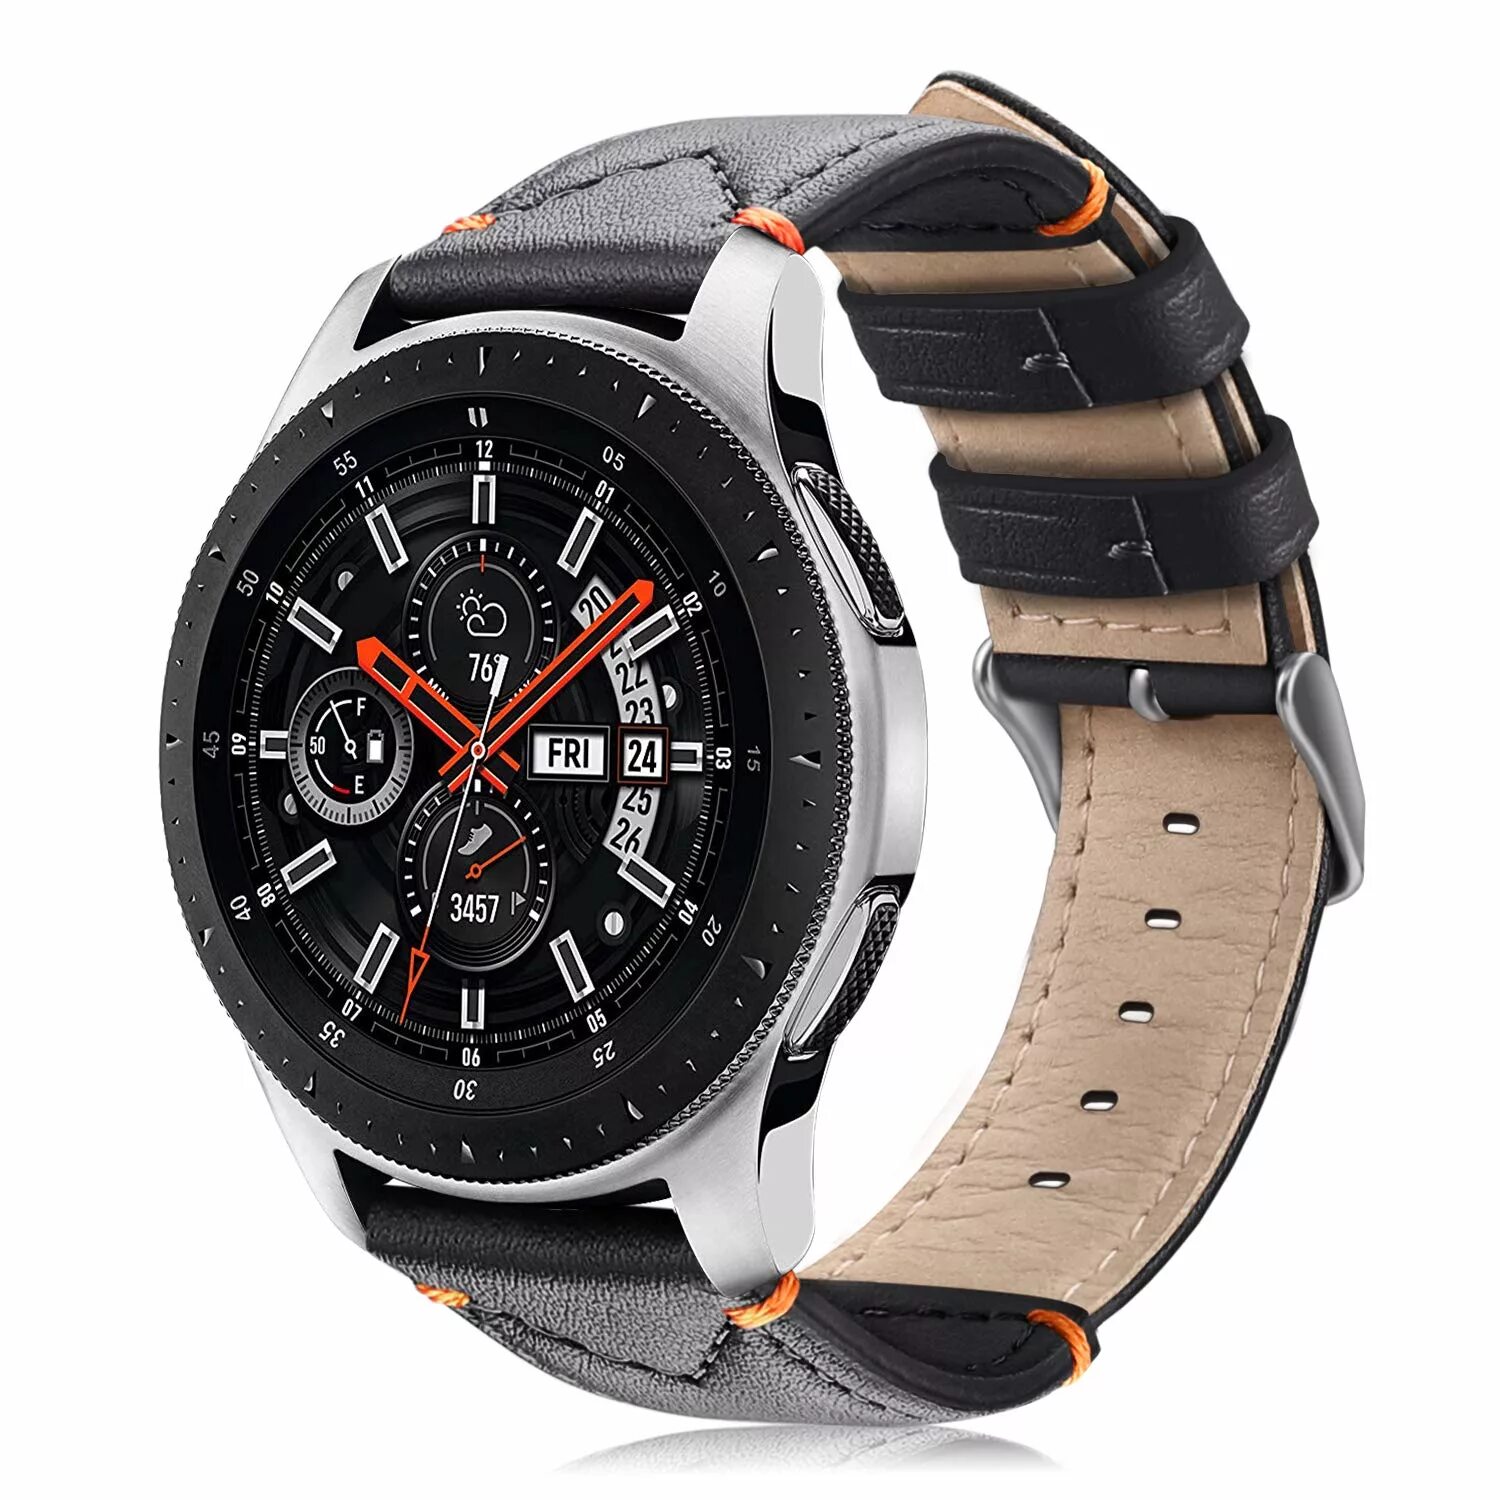 Смарт часы samsung 46mm. Часы самсунг вотч 3 мужские 46мм. Samsung Galaxy Gear s3 Classic r770 (Silver). Часы самсунг Galaxy watch мужские 46. Samsung Galaxy watch 46mm кожаный ремень.